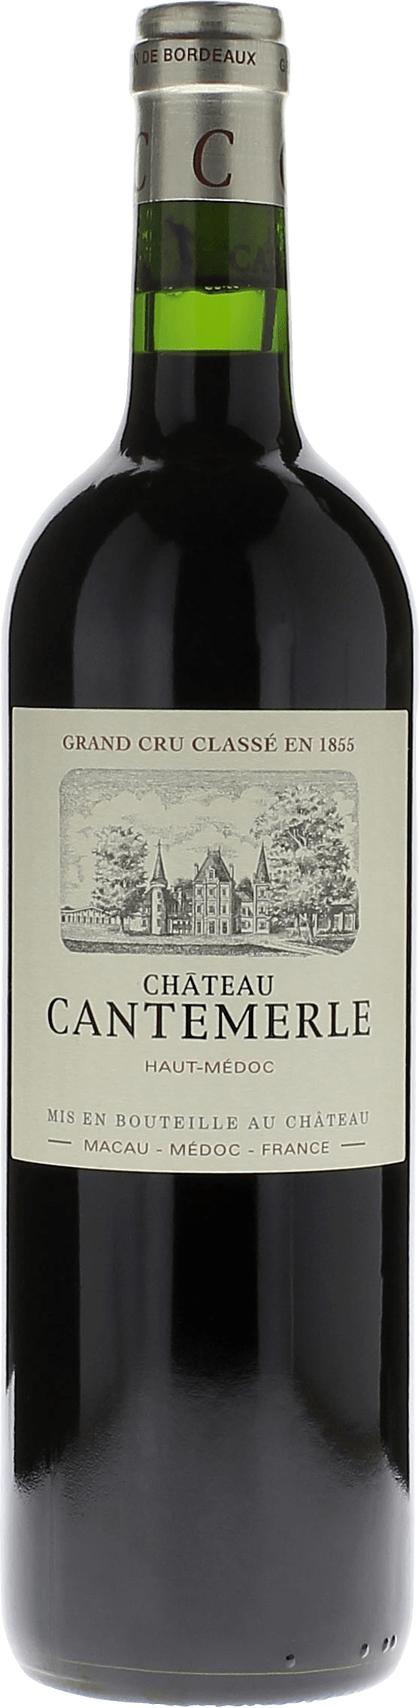 Cantemerle 2014 5me Grand cru class Mdoc, Bordeaux rouge